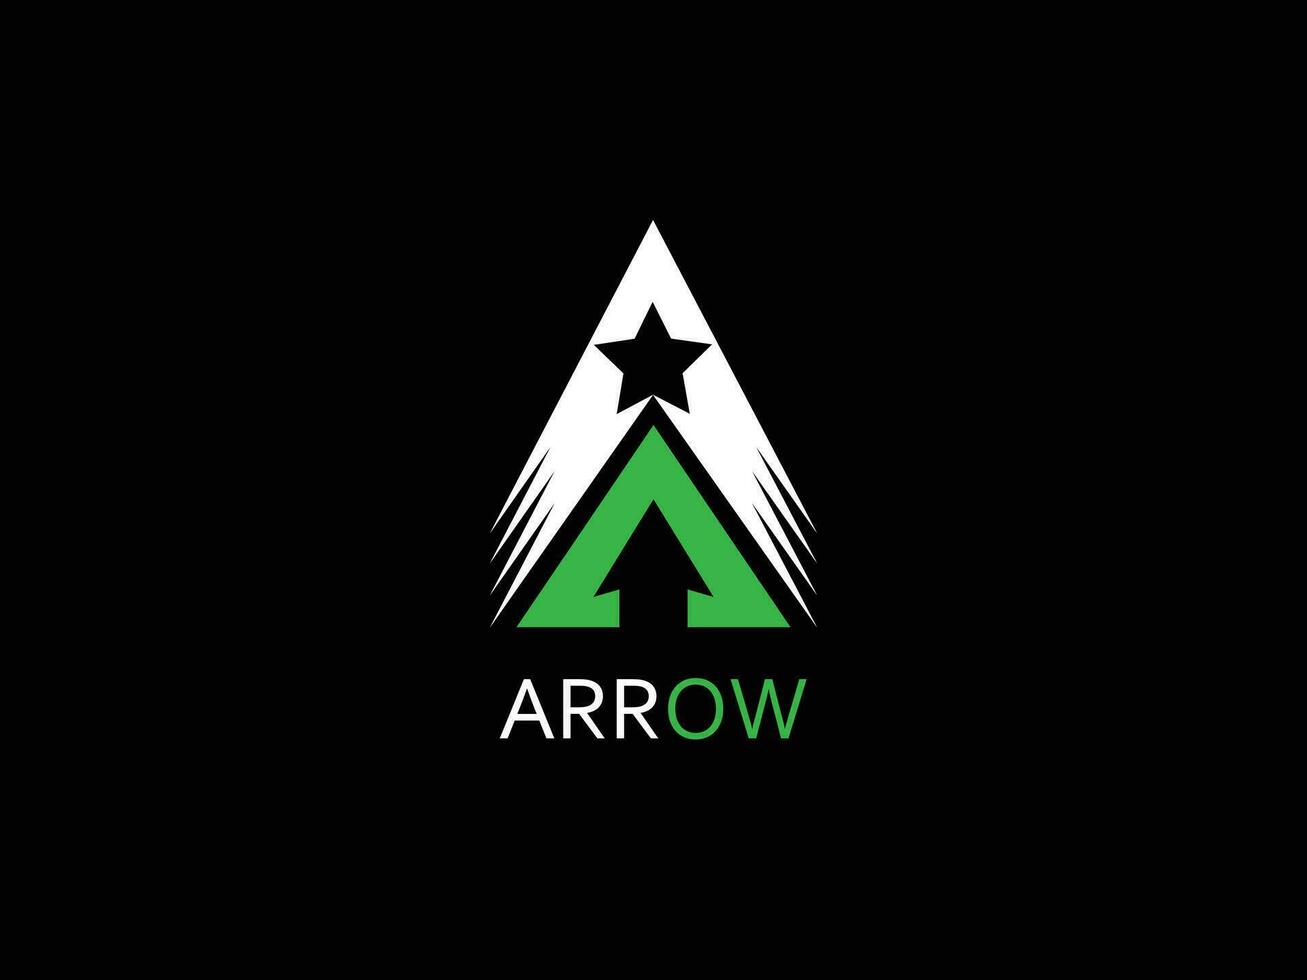 Arrow logo with a letter vector